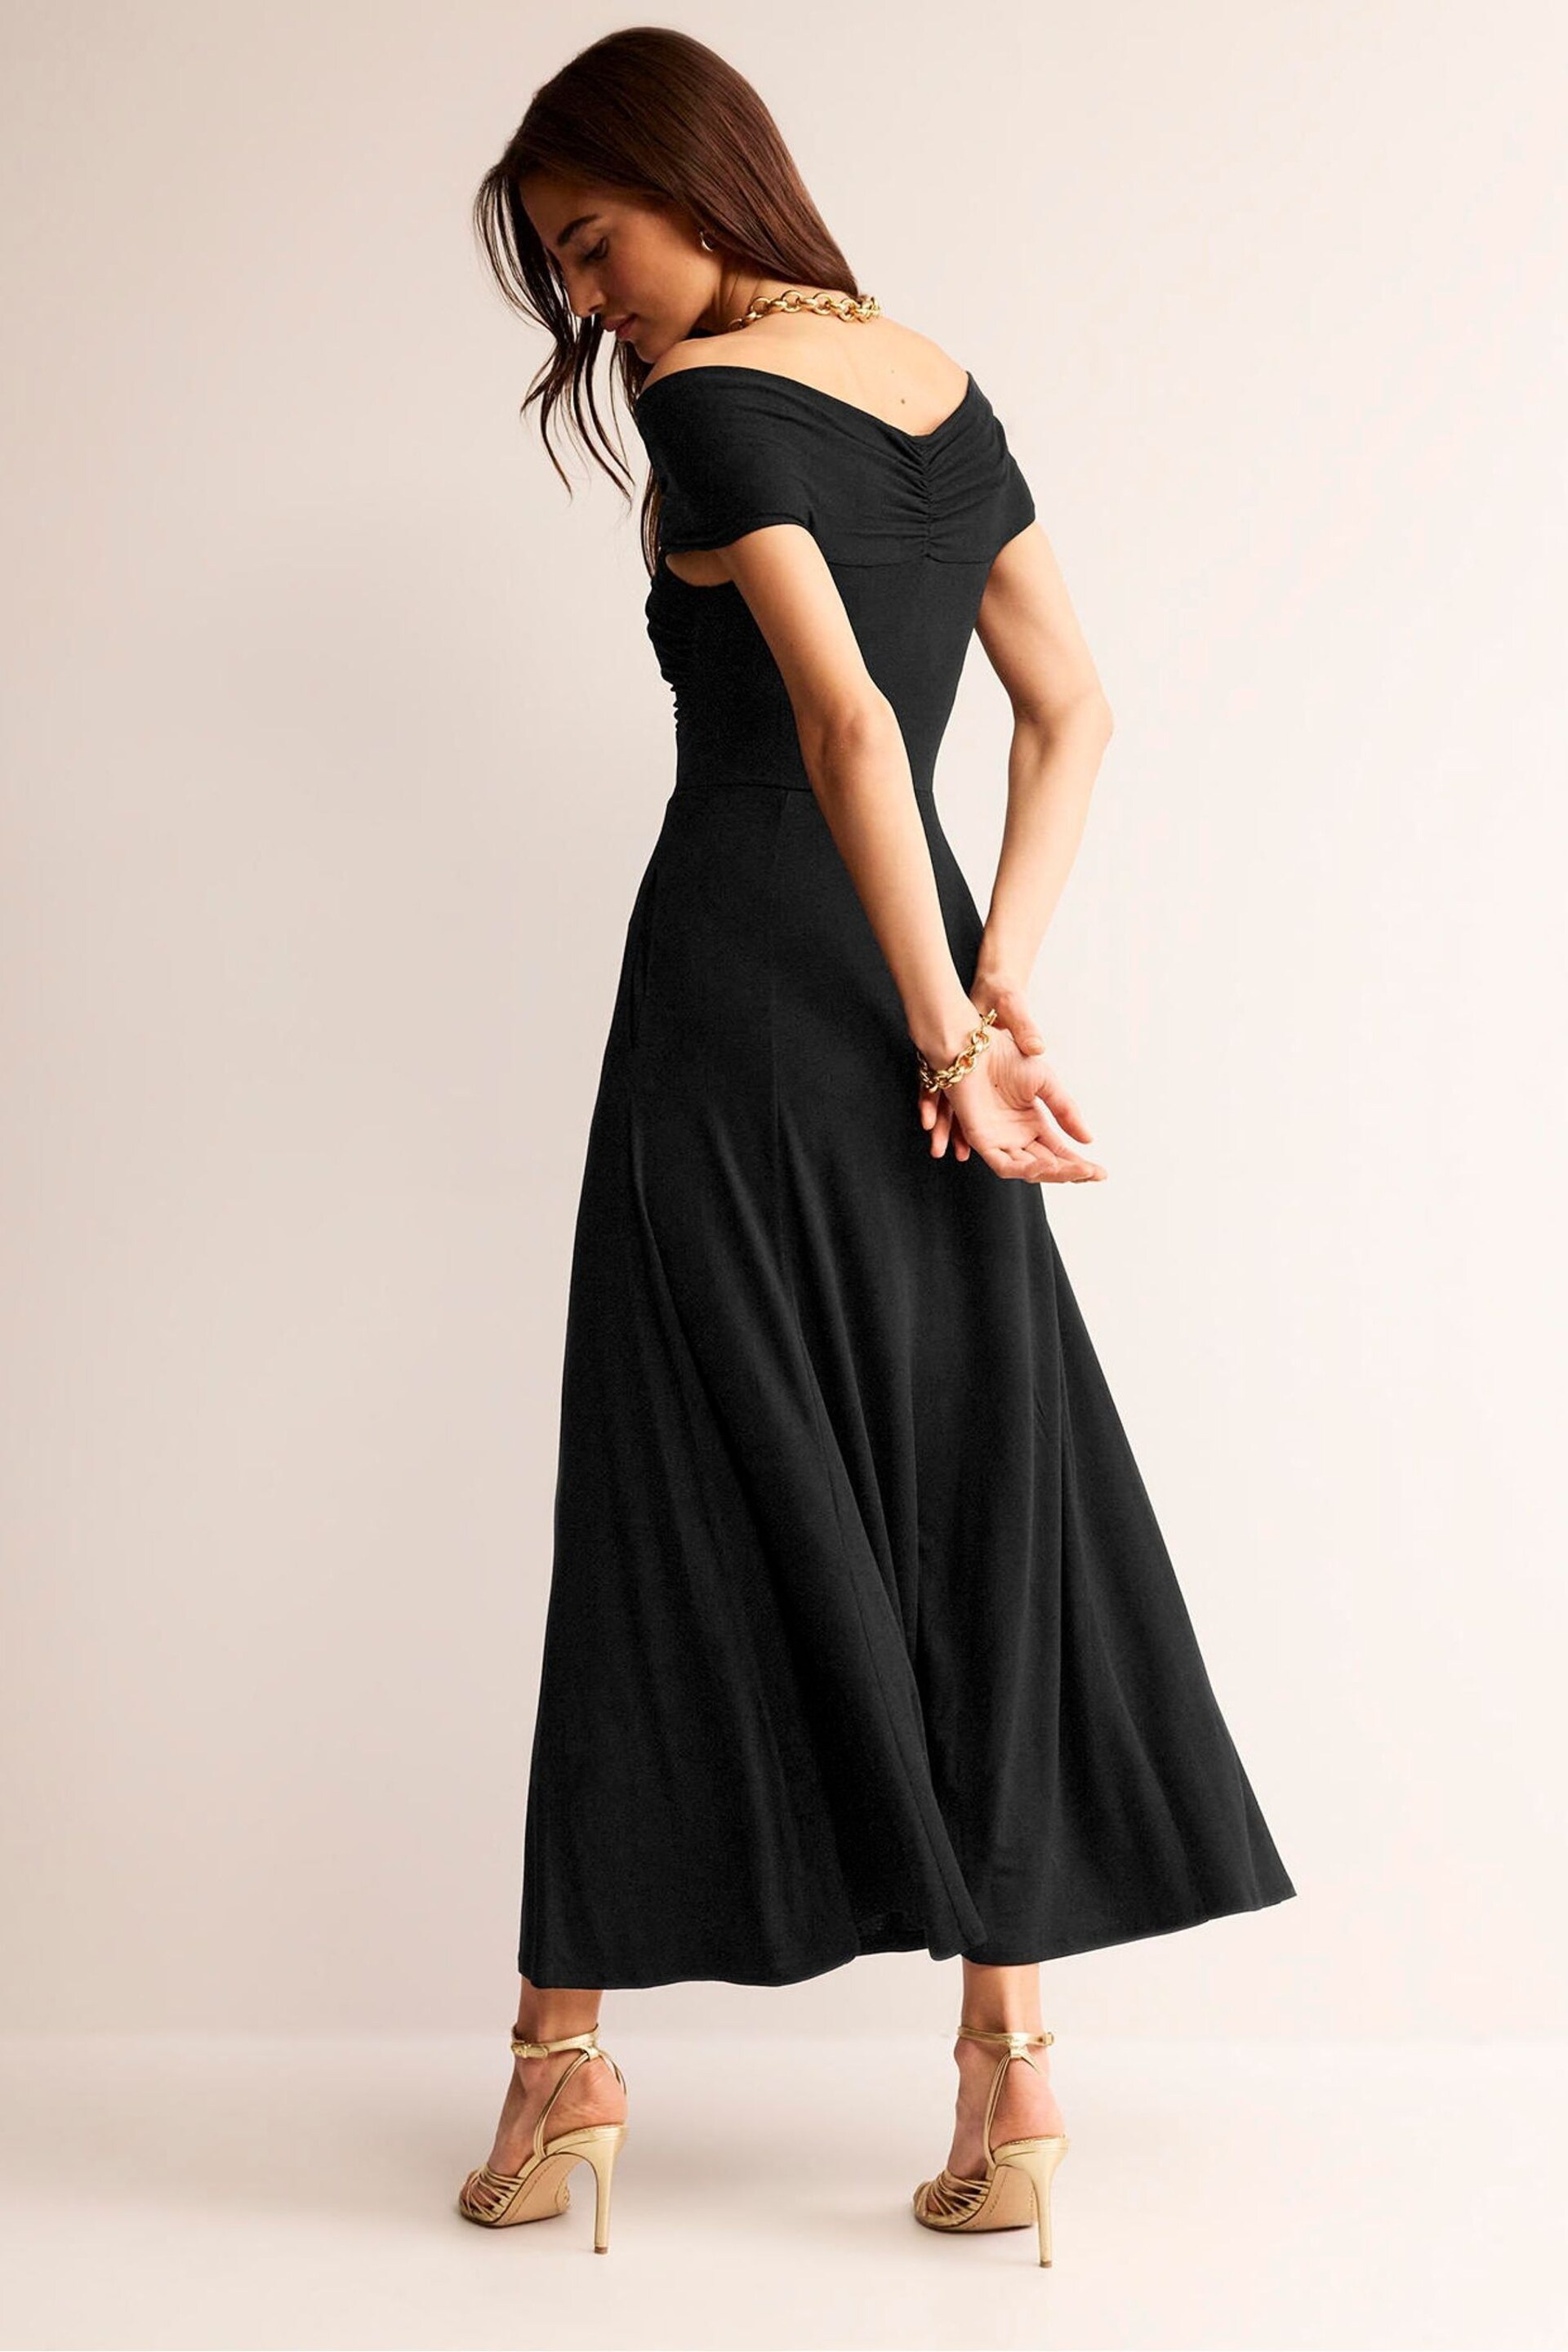 Boden Black Bardot Jersey Maxi Dress - Image 2 of 5